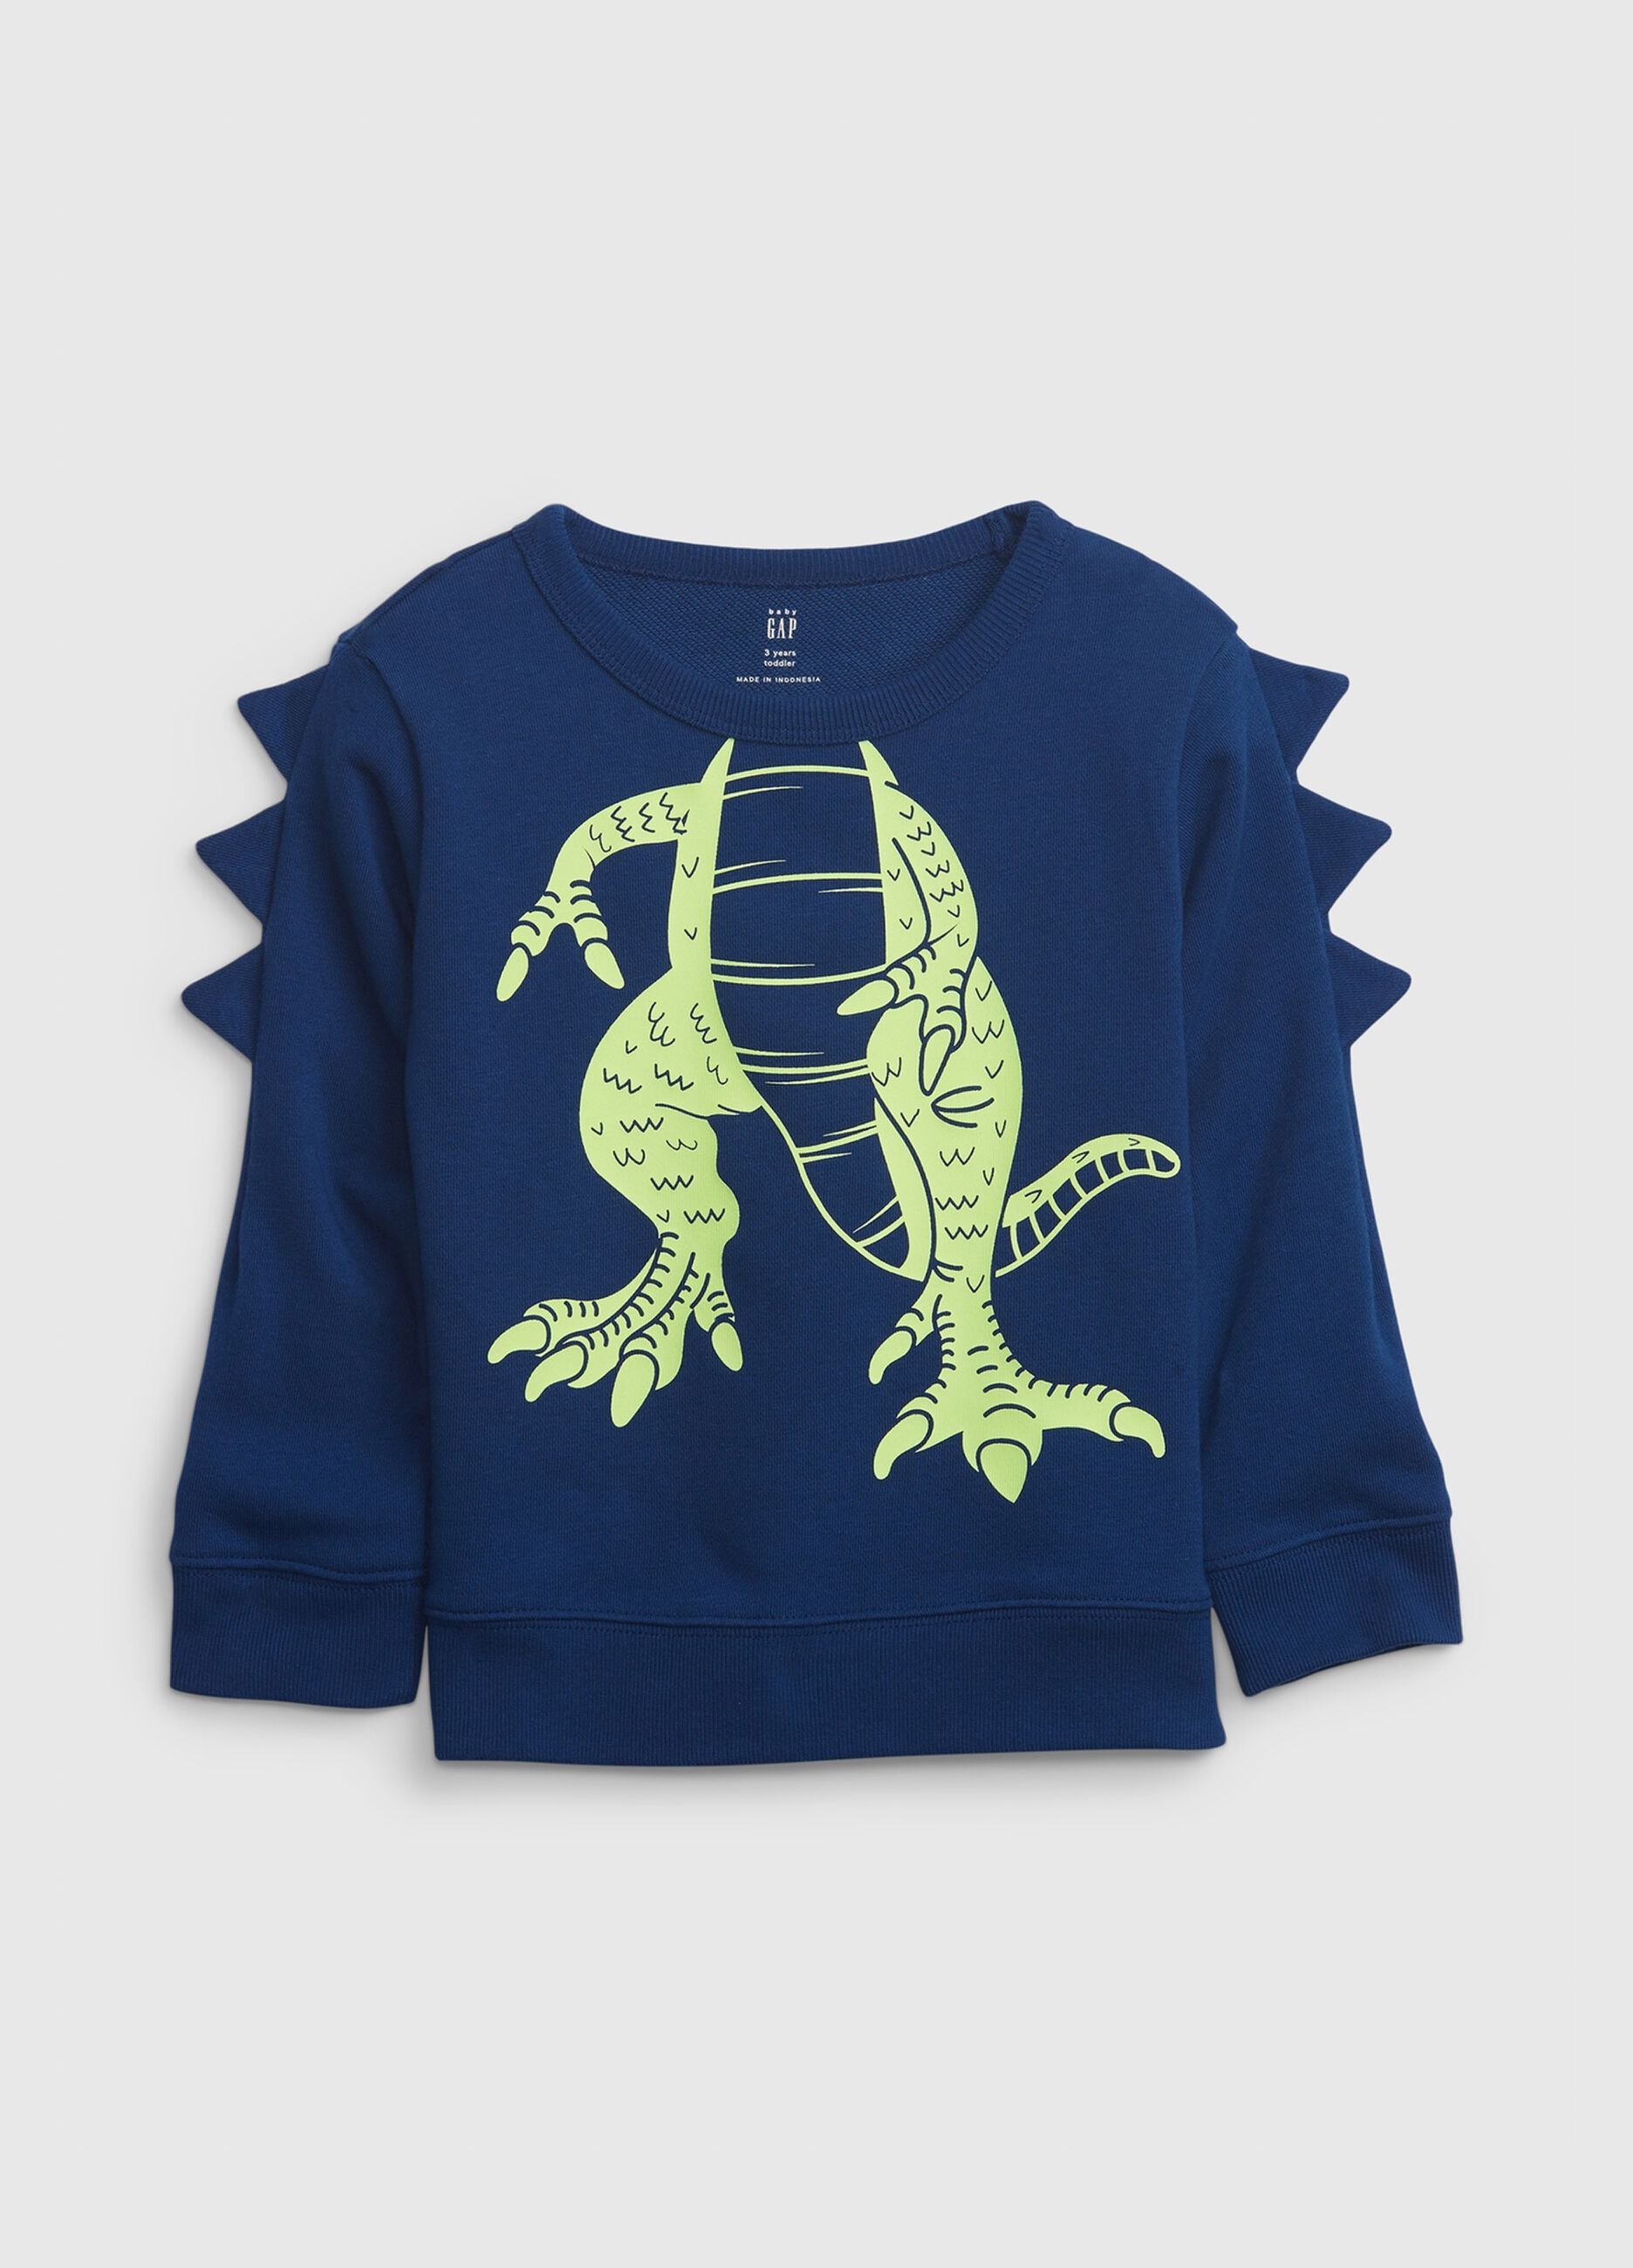 Sweatshirt with dinosaur and crests print